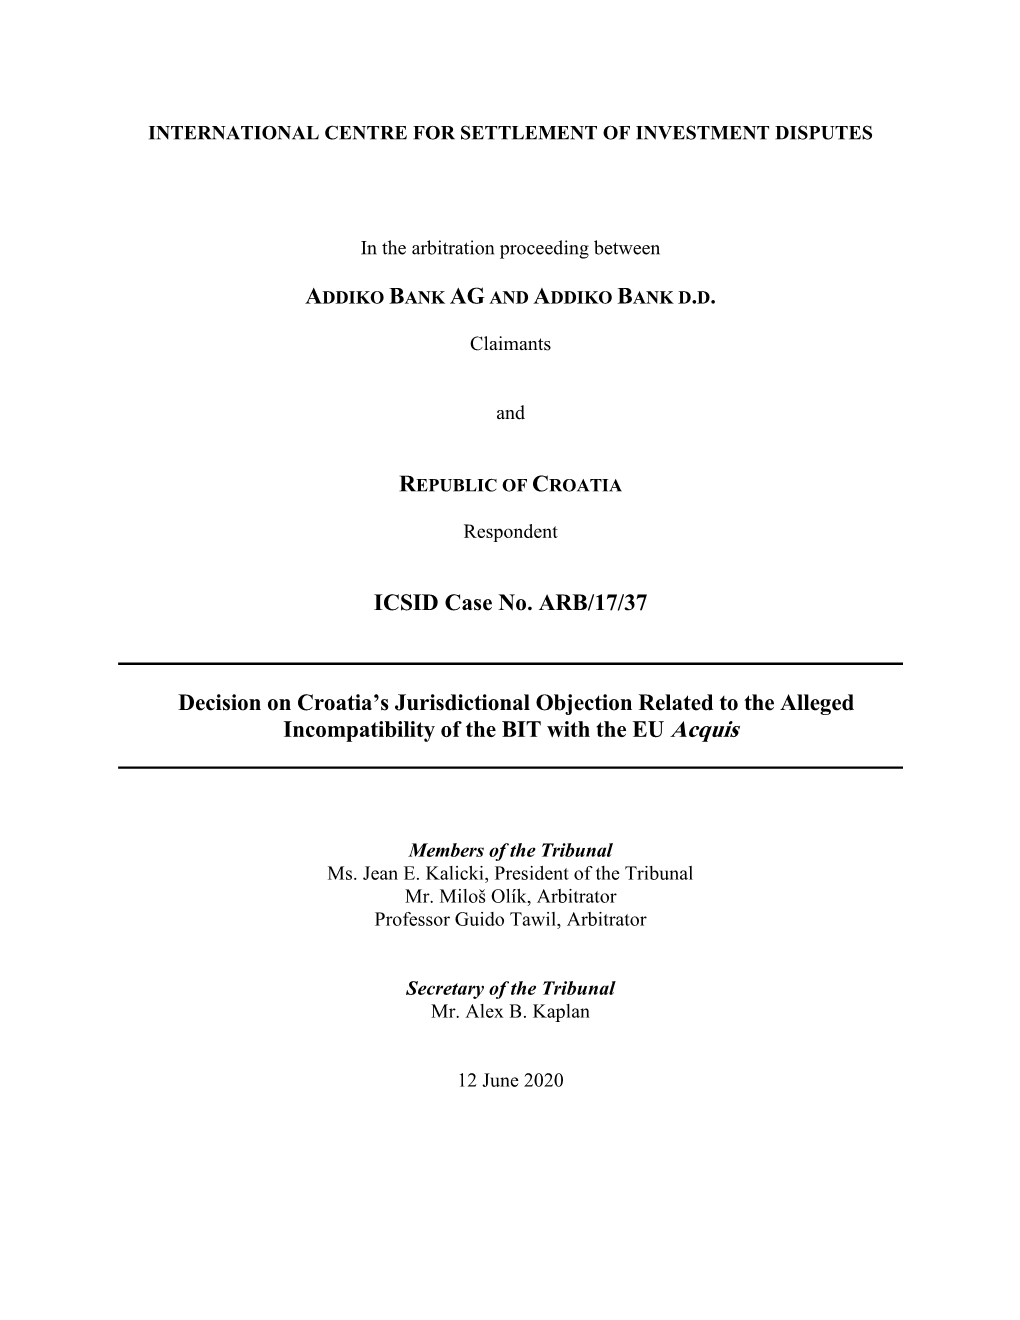 ICSID Case No. ARB/17/37 Decision on Croatia's Jurisdictional